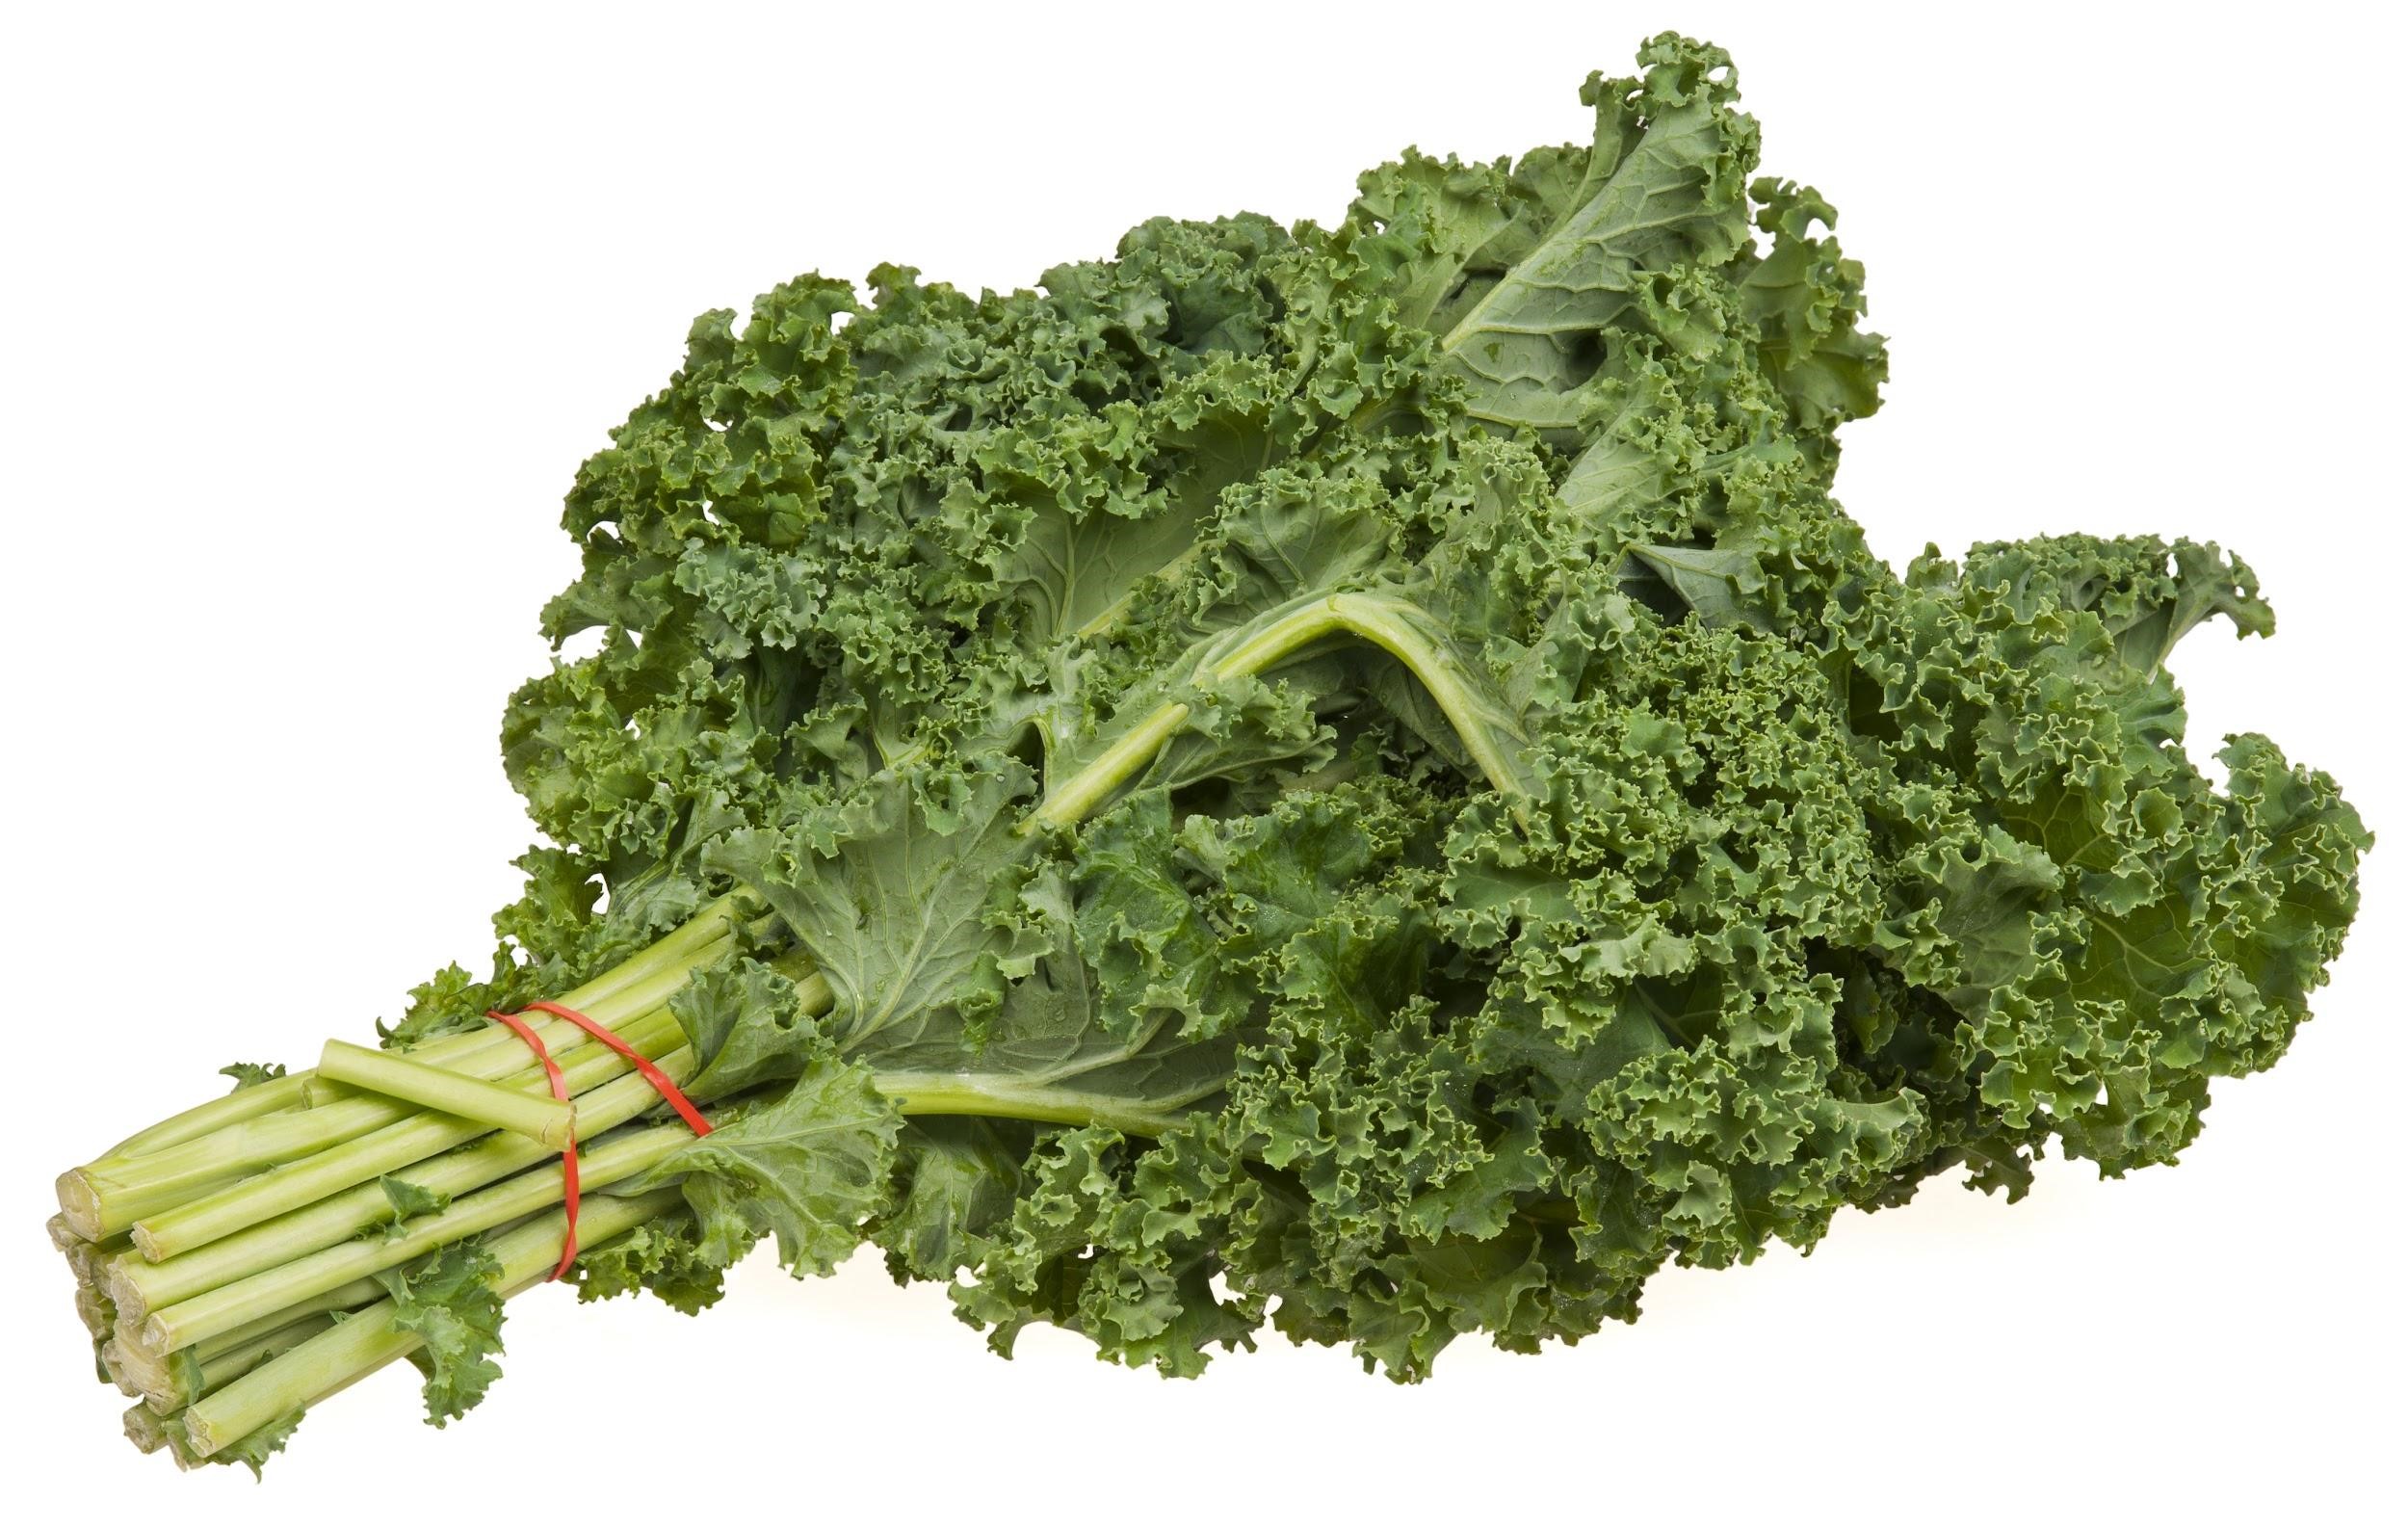 25 Most keto-friendly food: Kale